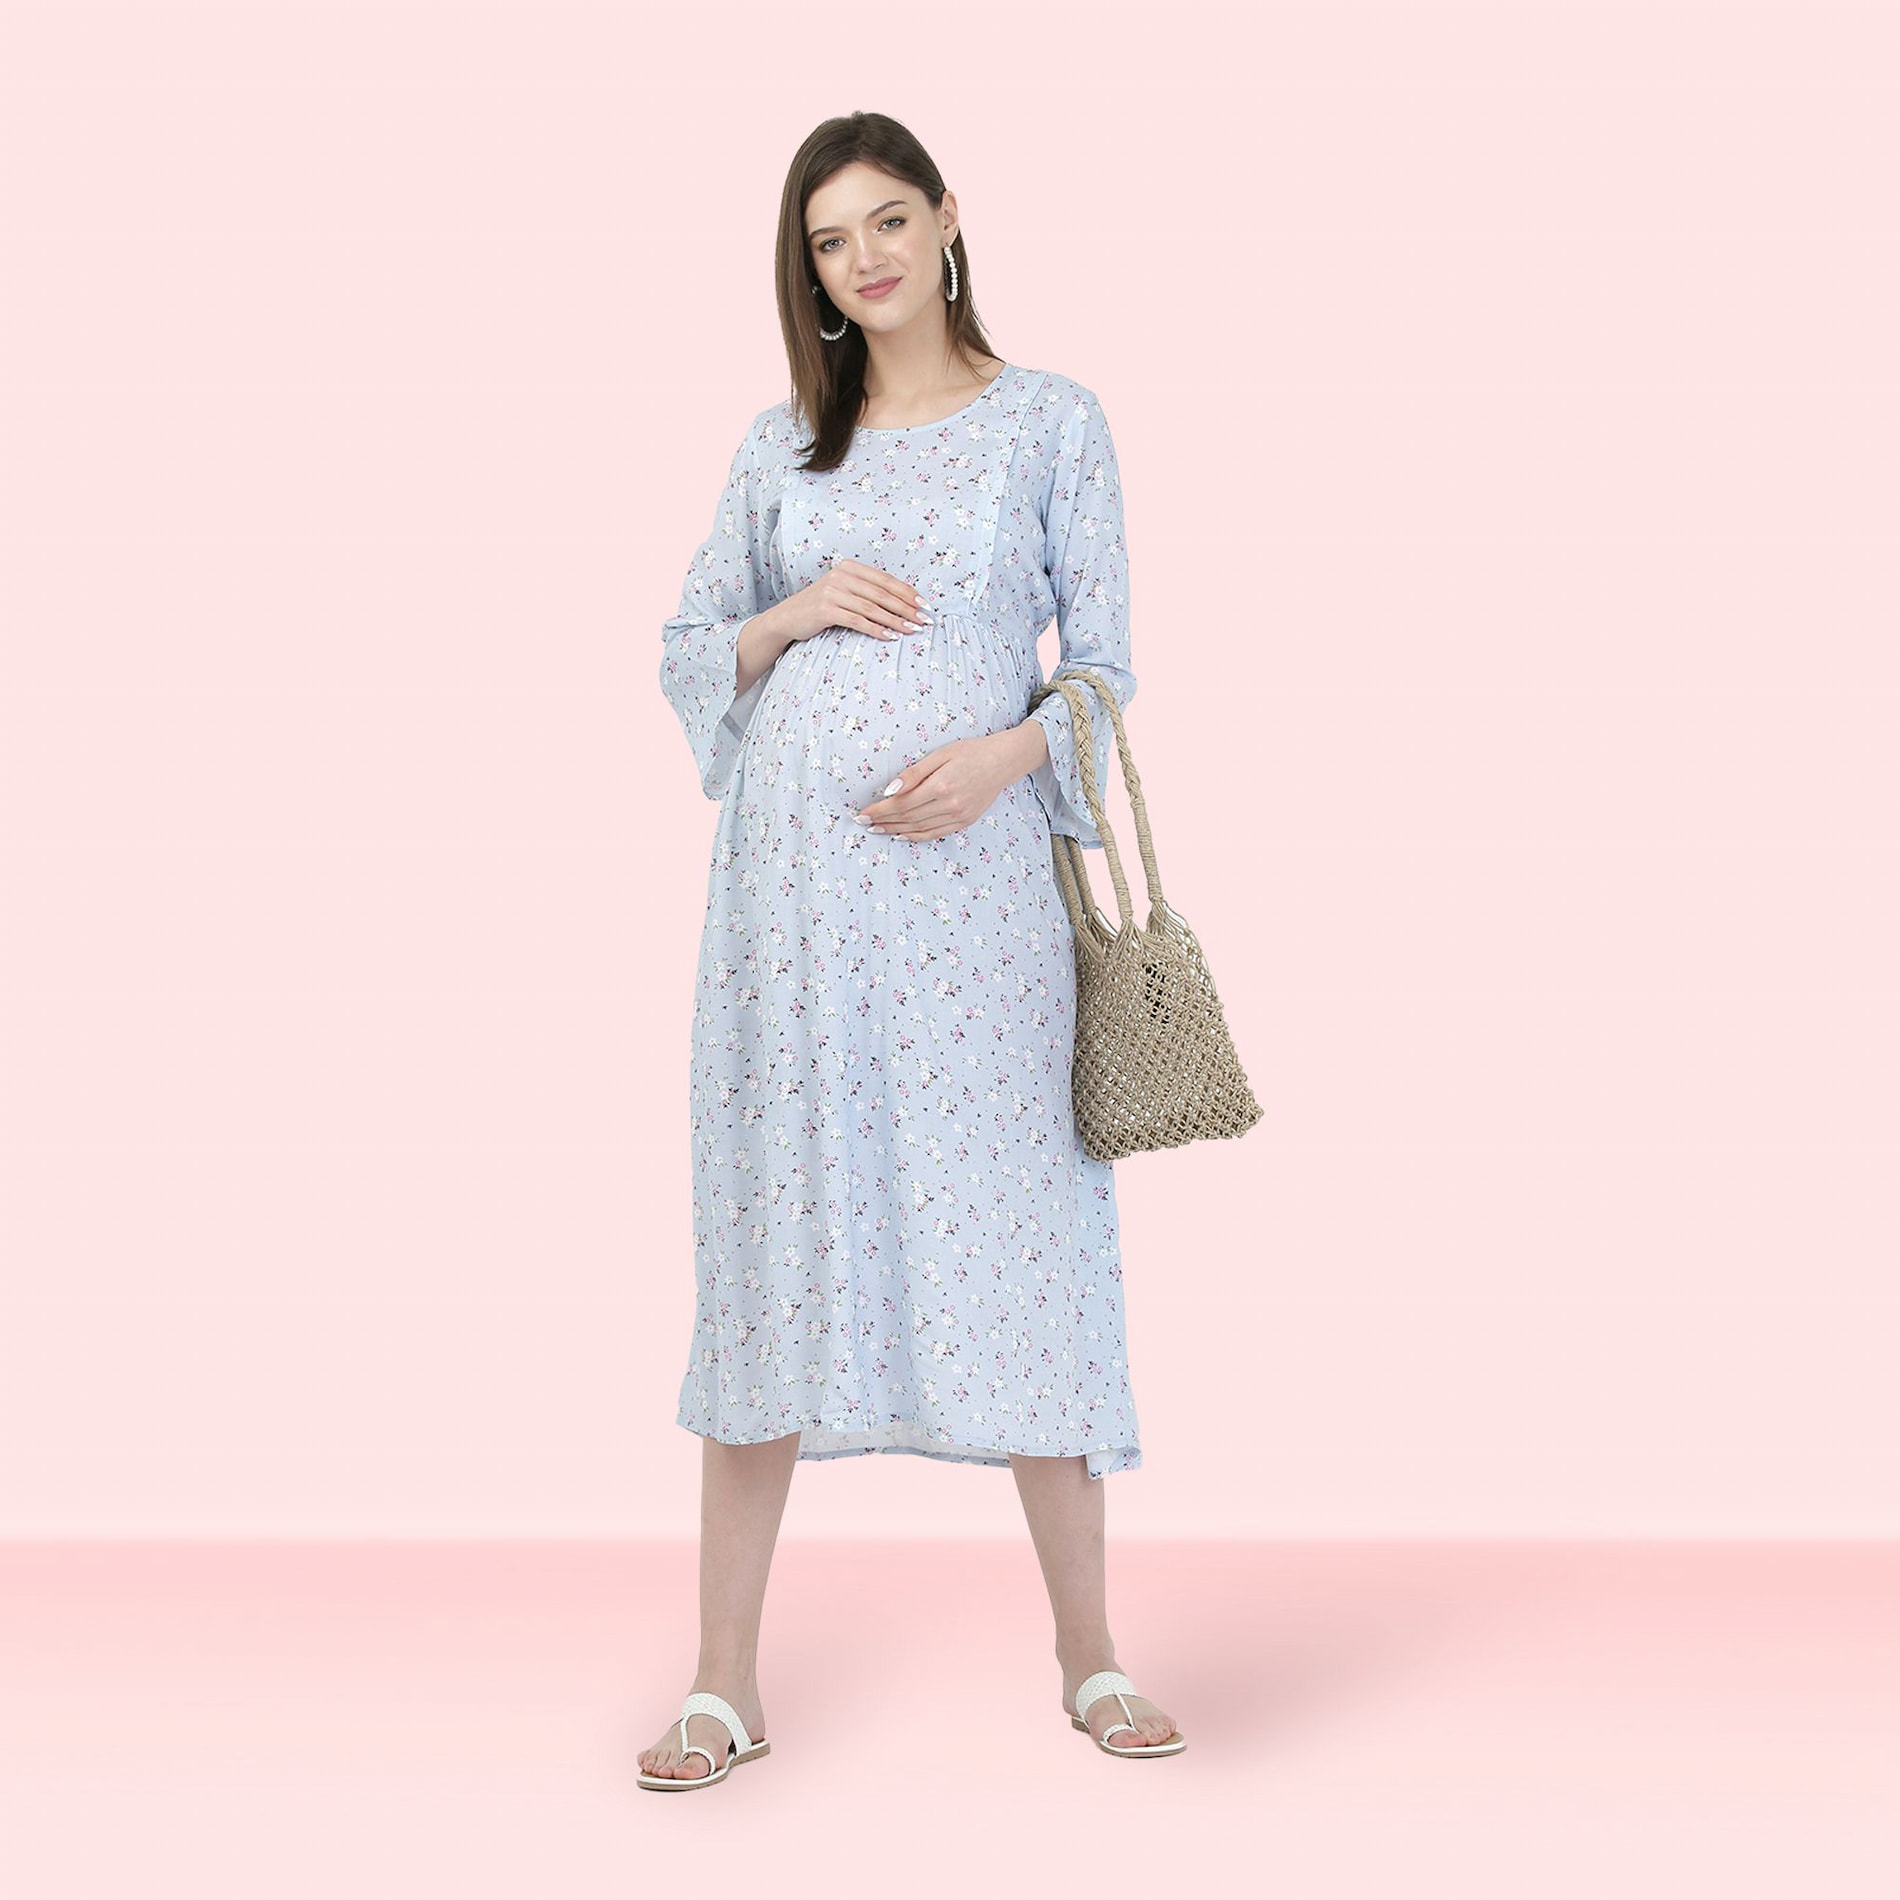 Mylo Pre & Post Maternity /Nursing Maxi Dress with both sides Zipper for Easy Feeding – Blue Ditsy Daisy –XL